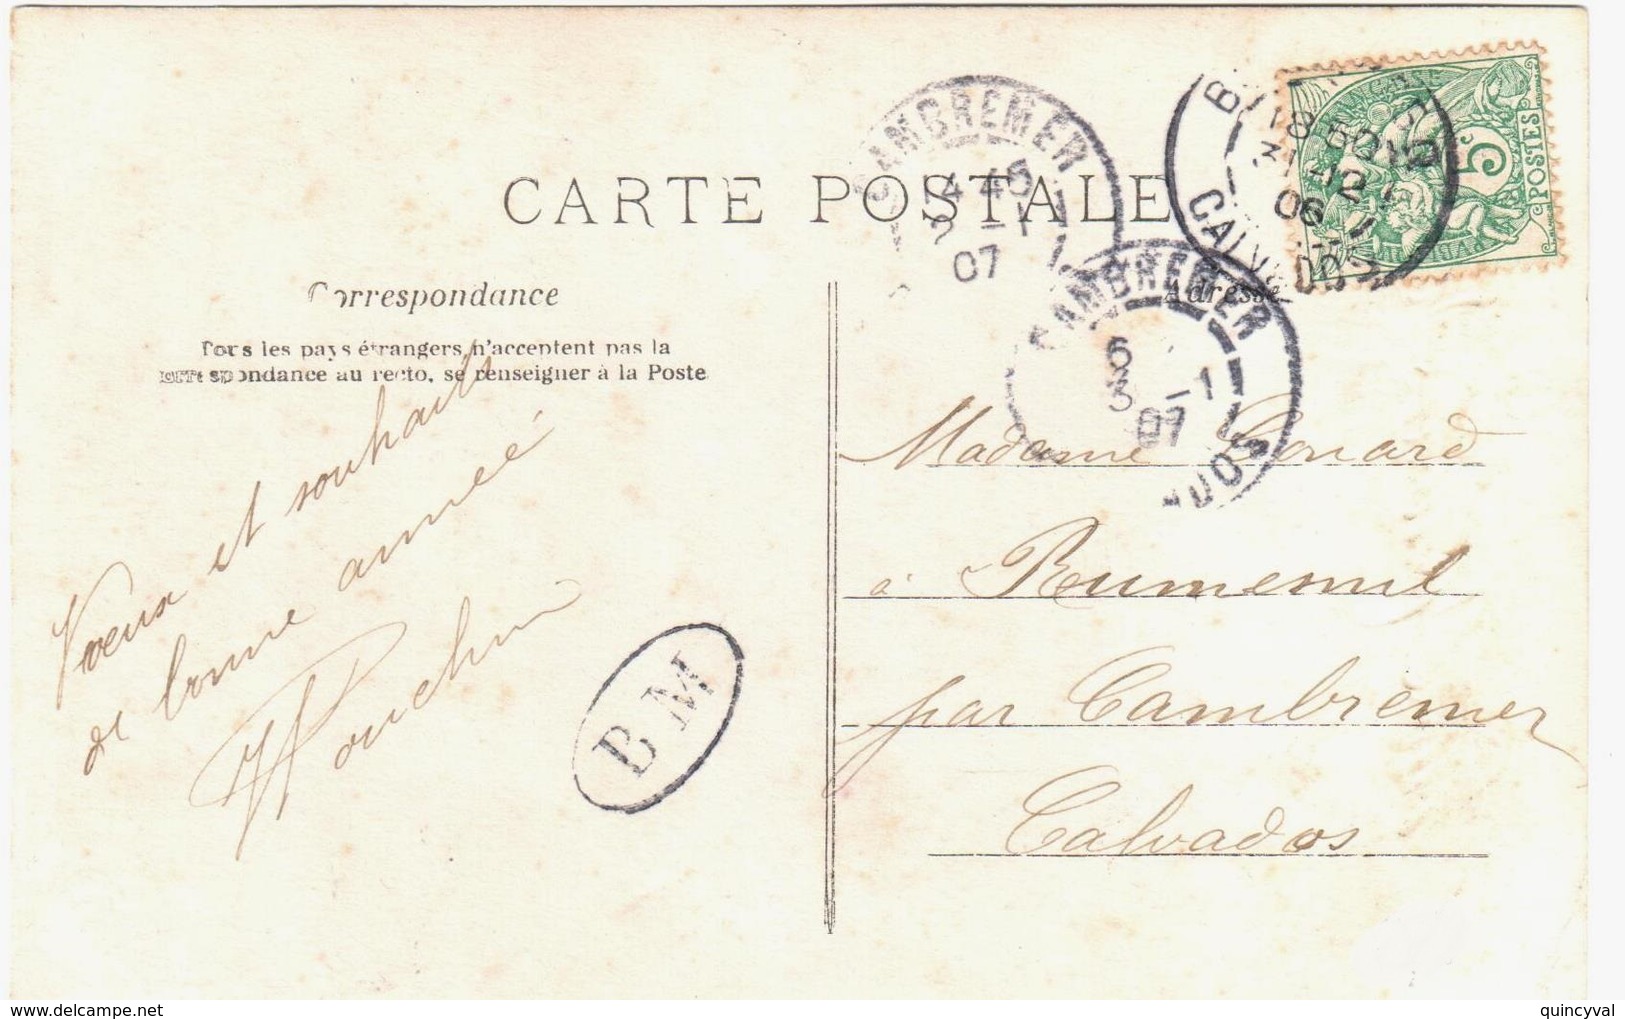 BONNEBOSQ Calvados Carte Postale 5c Blanc Yv 111 Déposée Boîte Mobile BM Dest Cambremer Ob 31 1 2 1906 - Briefe U. Dokumente